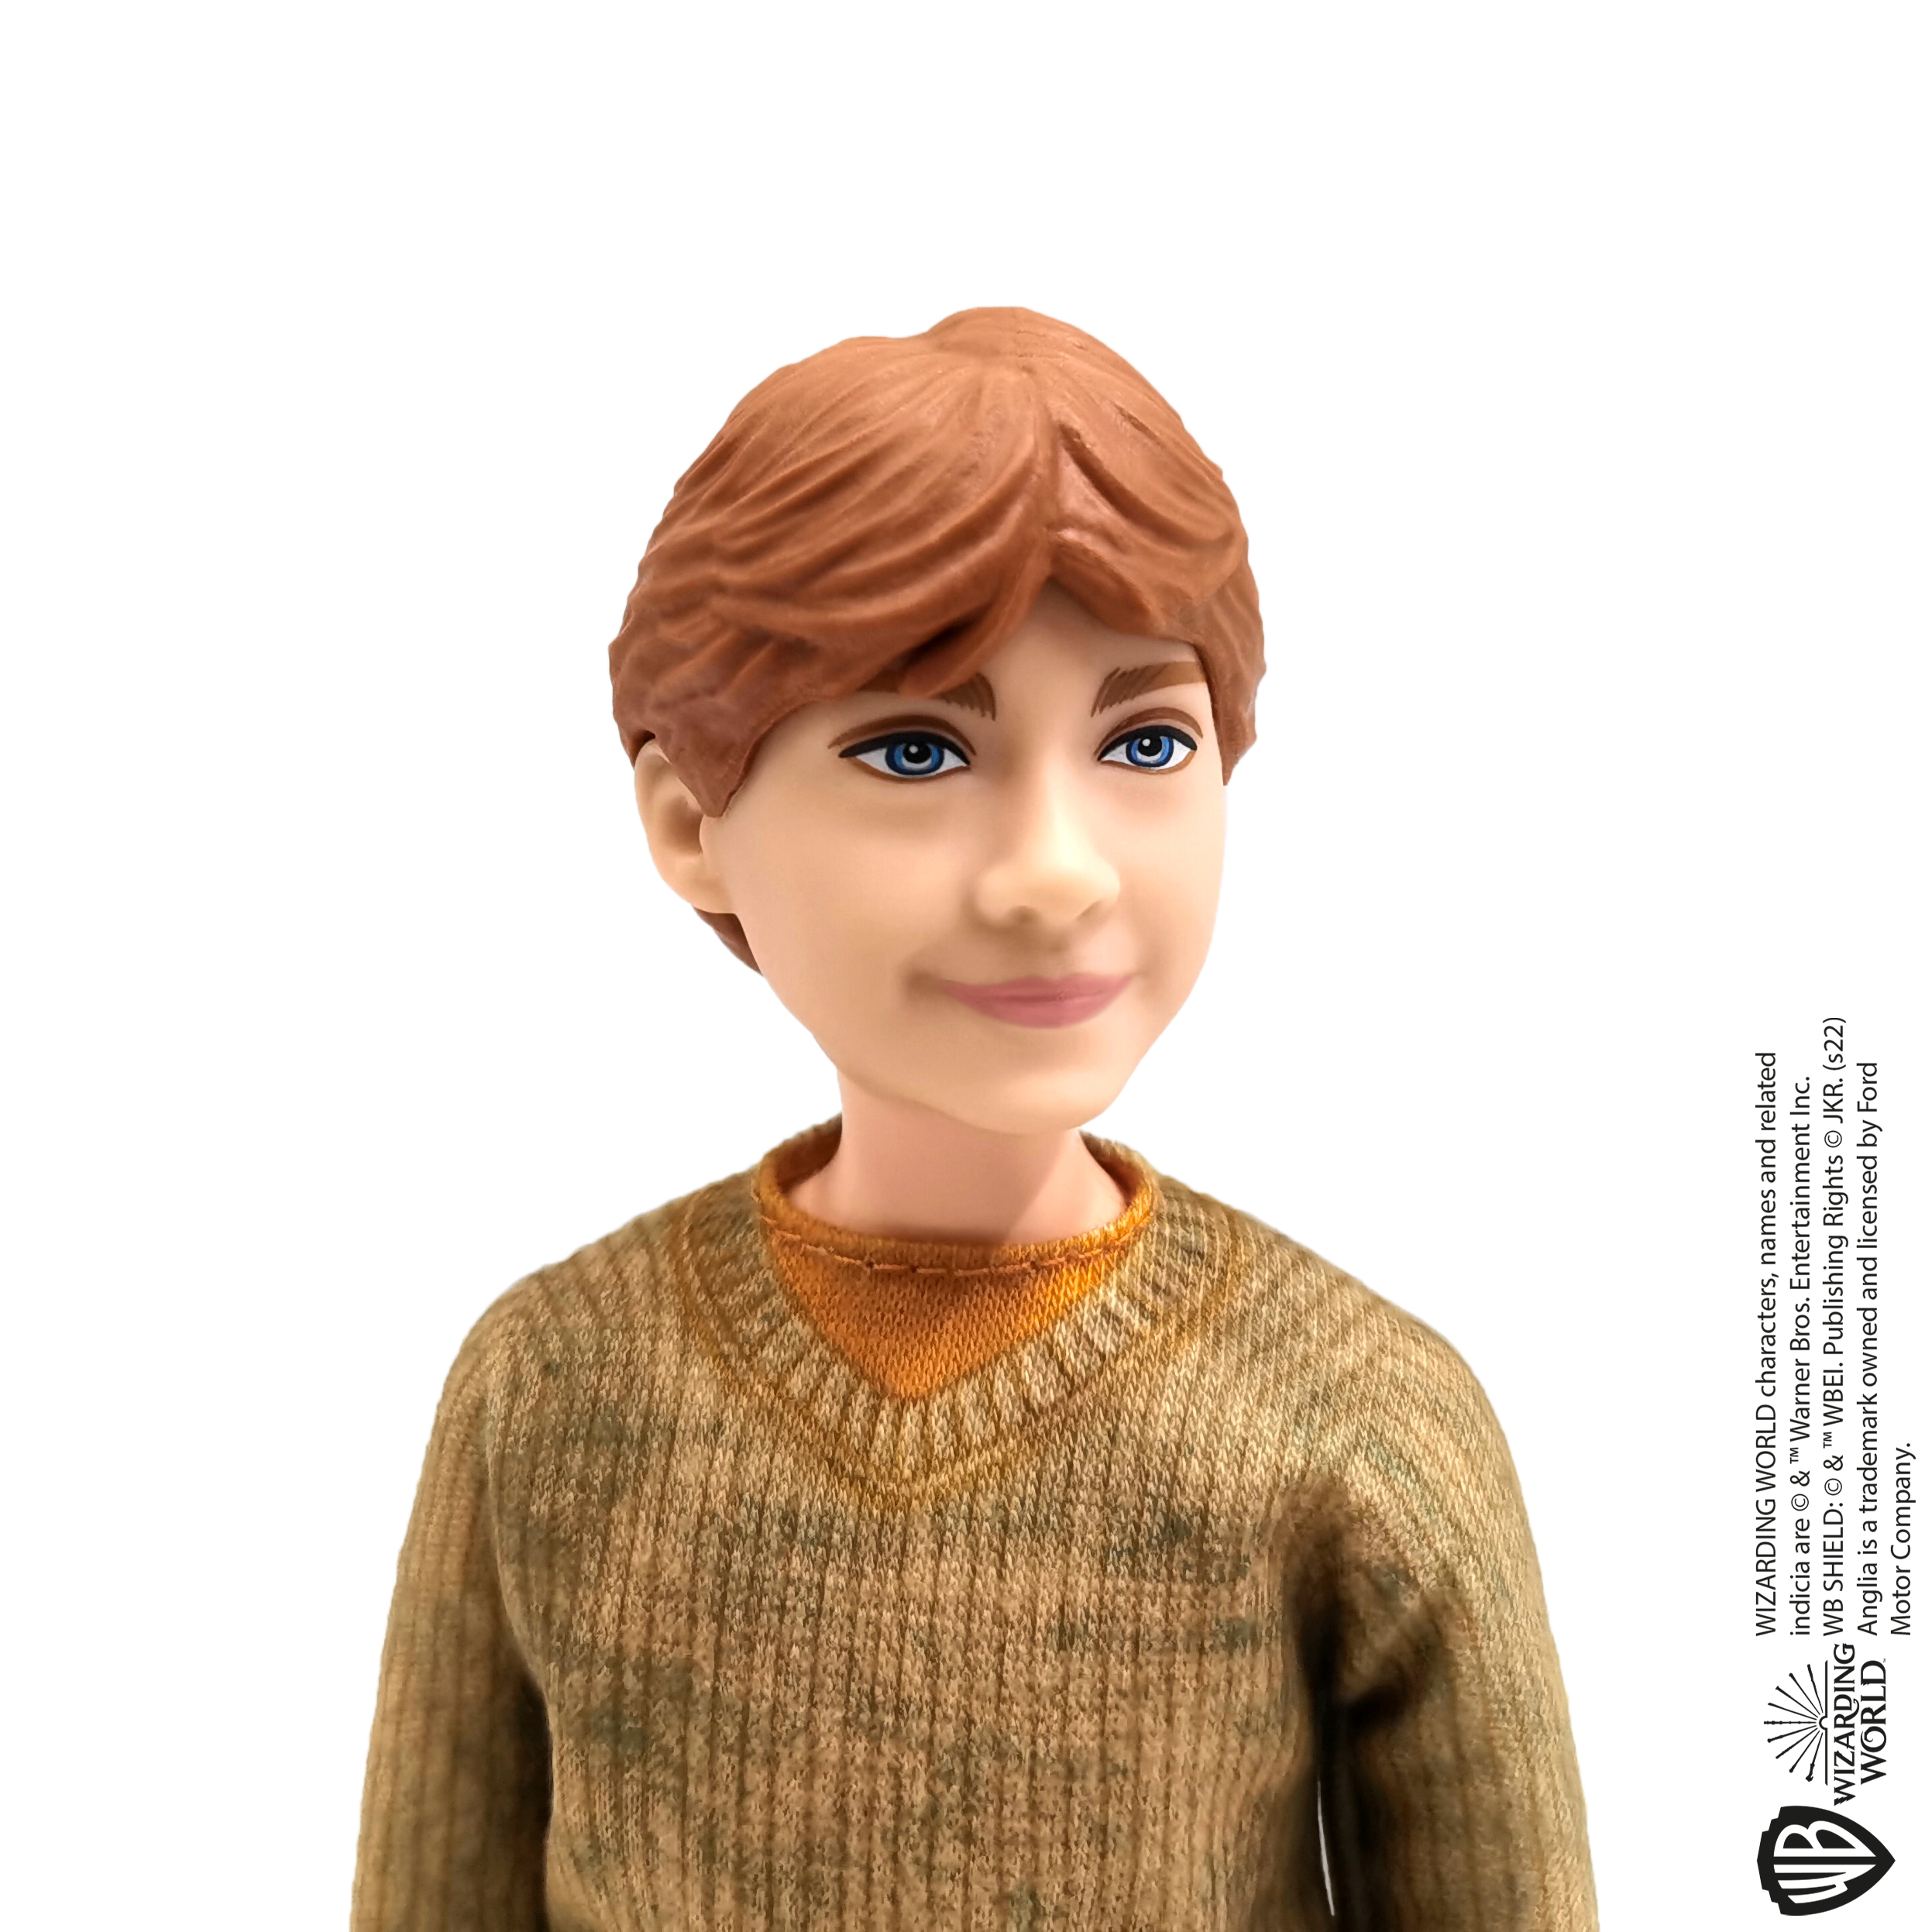 Mattel Harry Potter HHX03 bambola [HHX03]